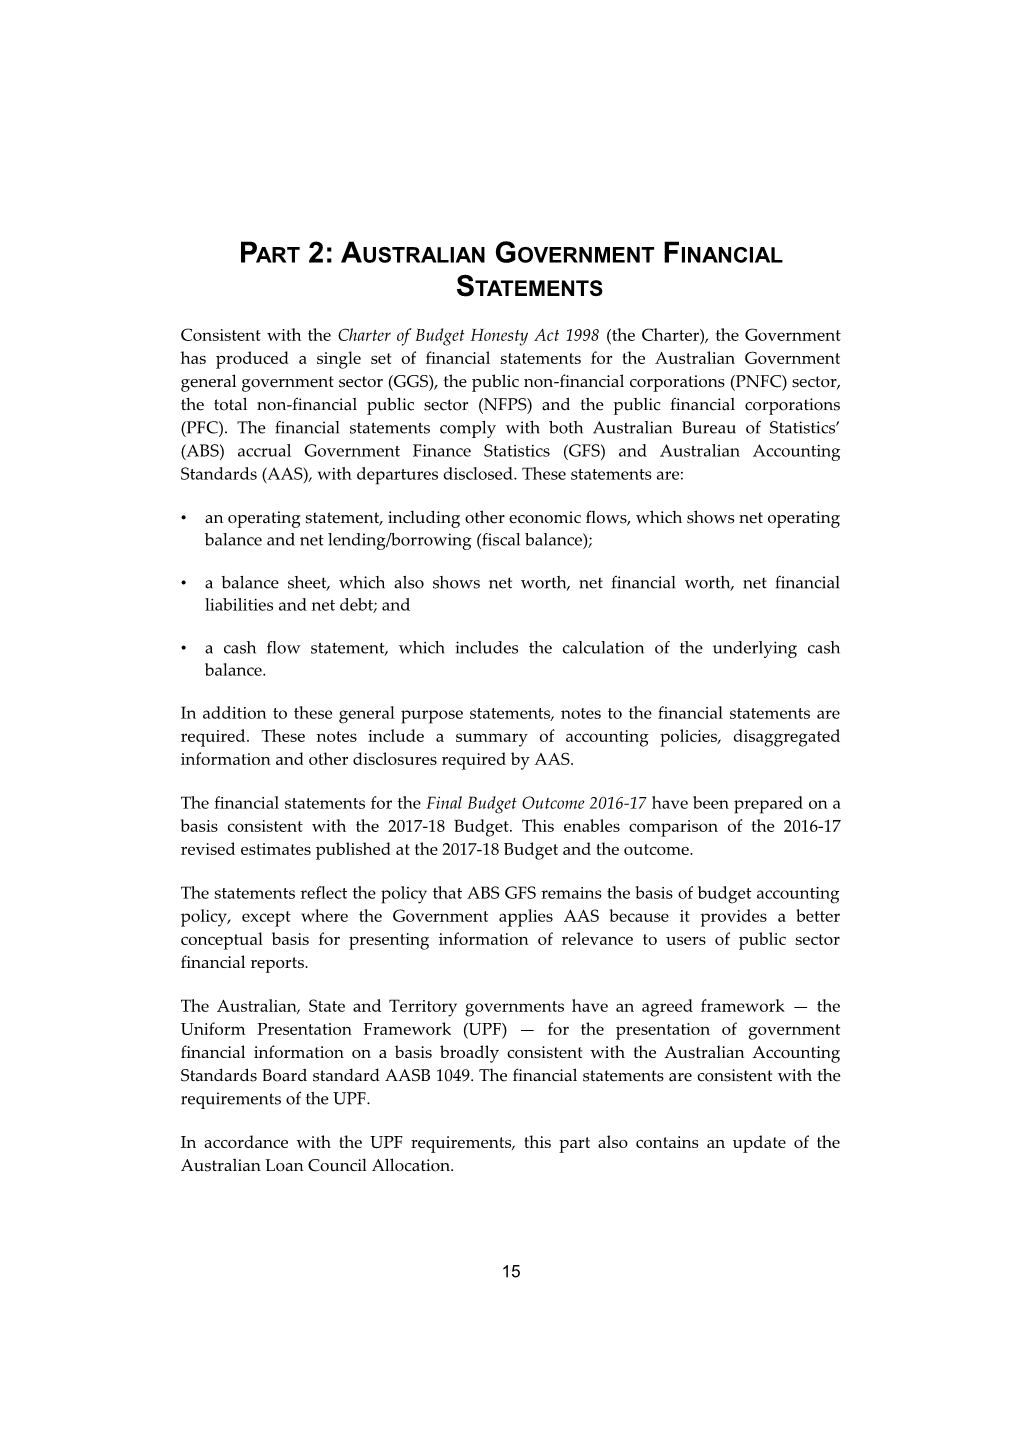 Part 2: Australian Government Financial Statements